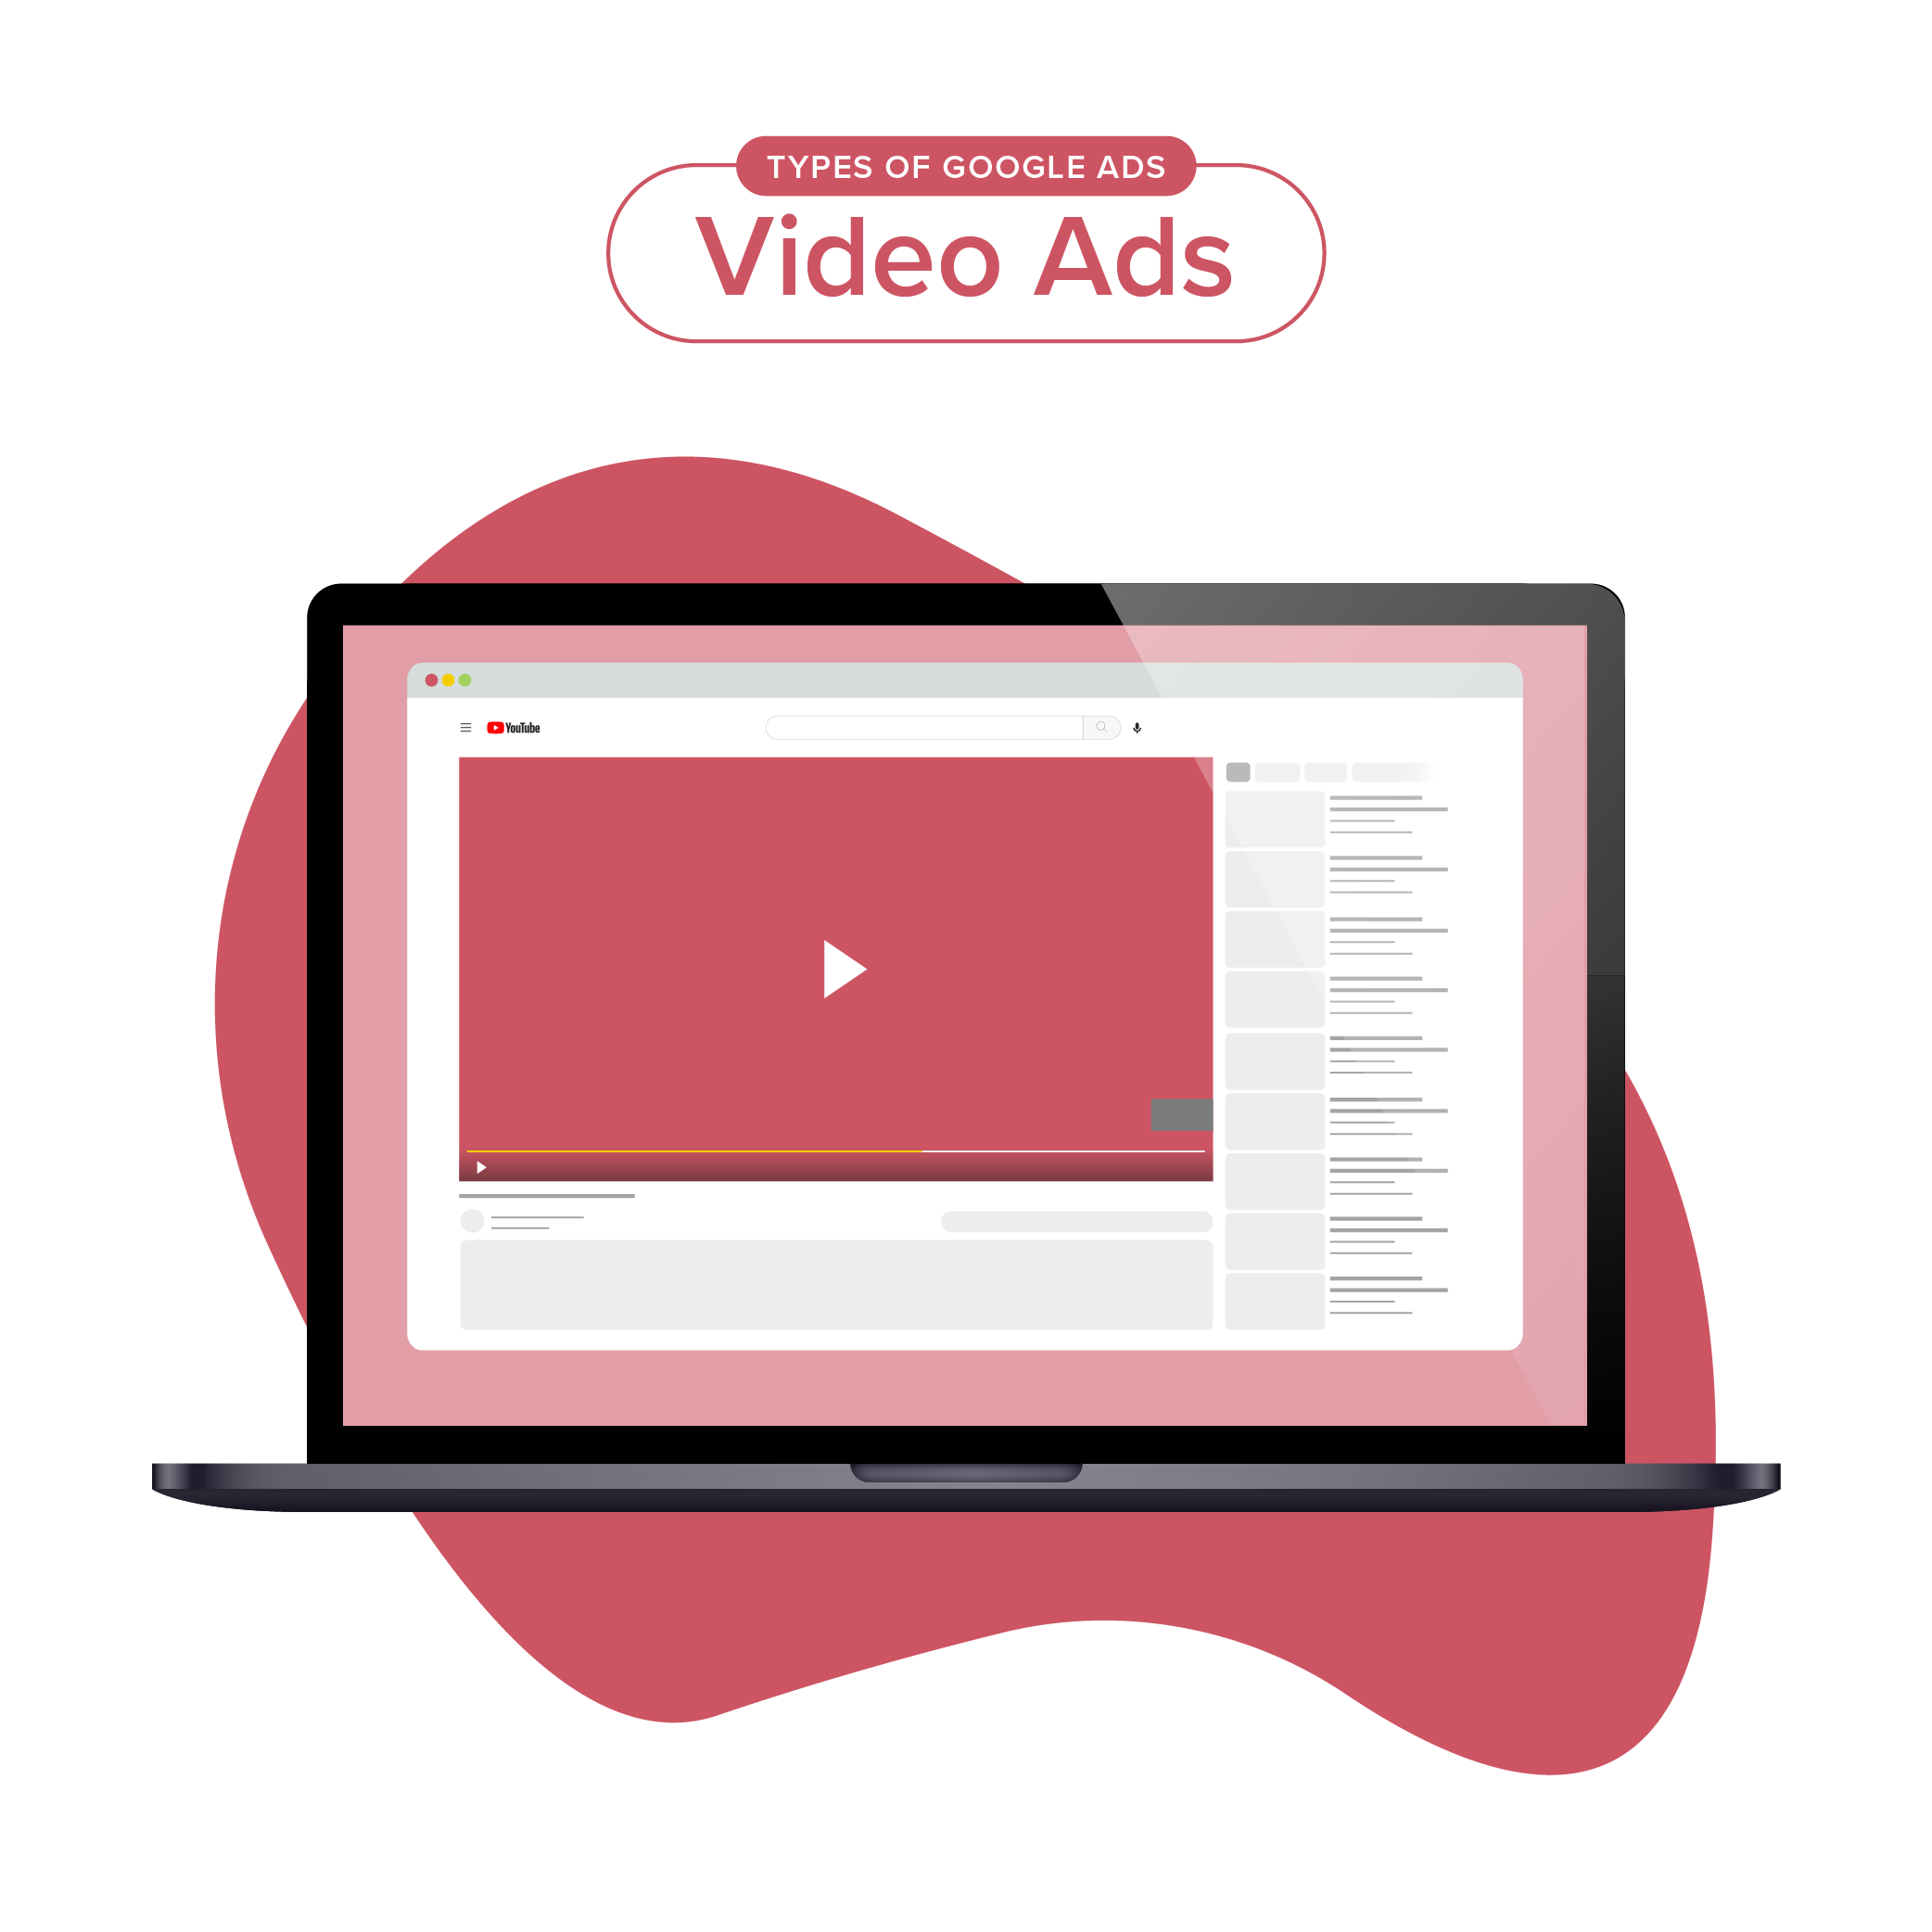 Google Ad Type: Video Ads